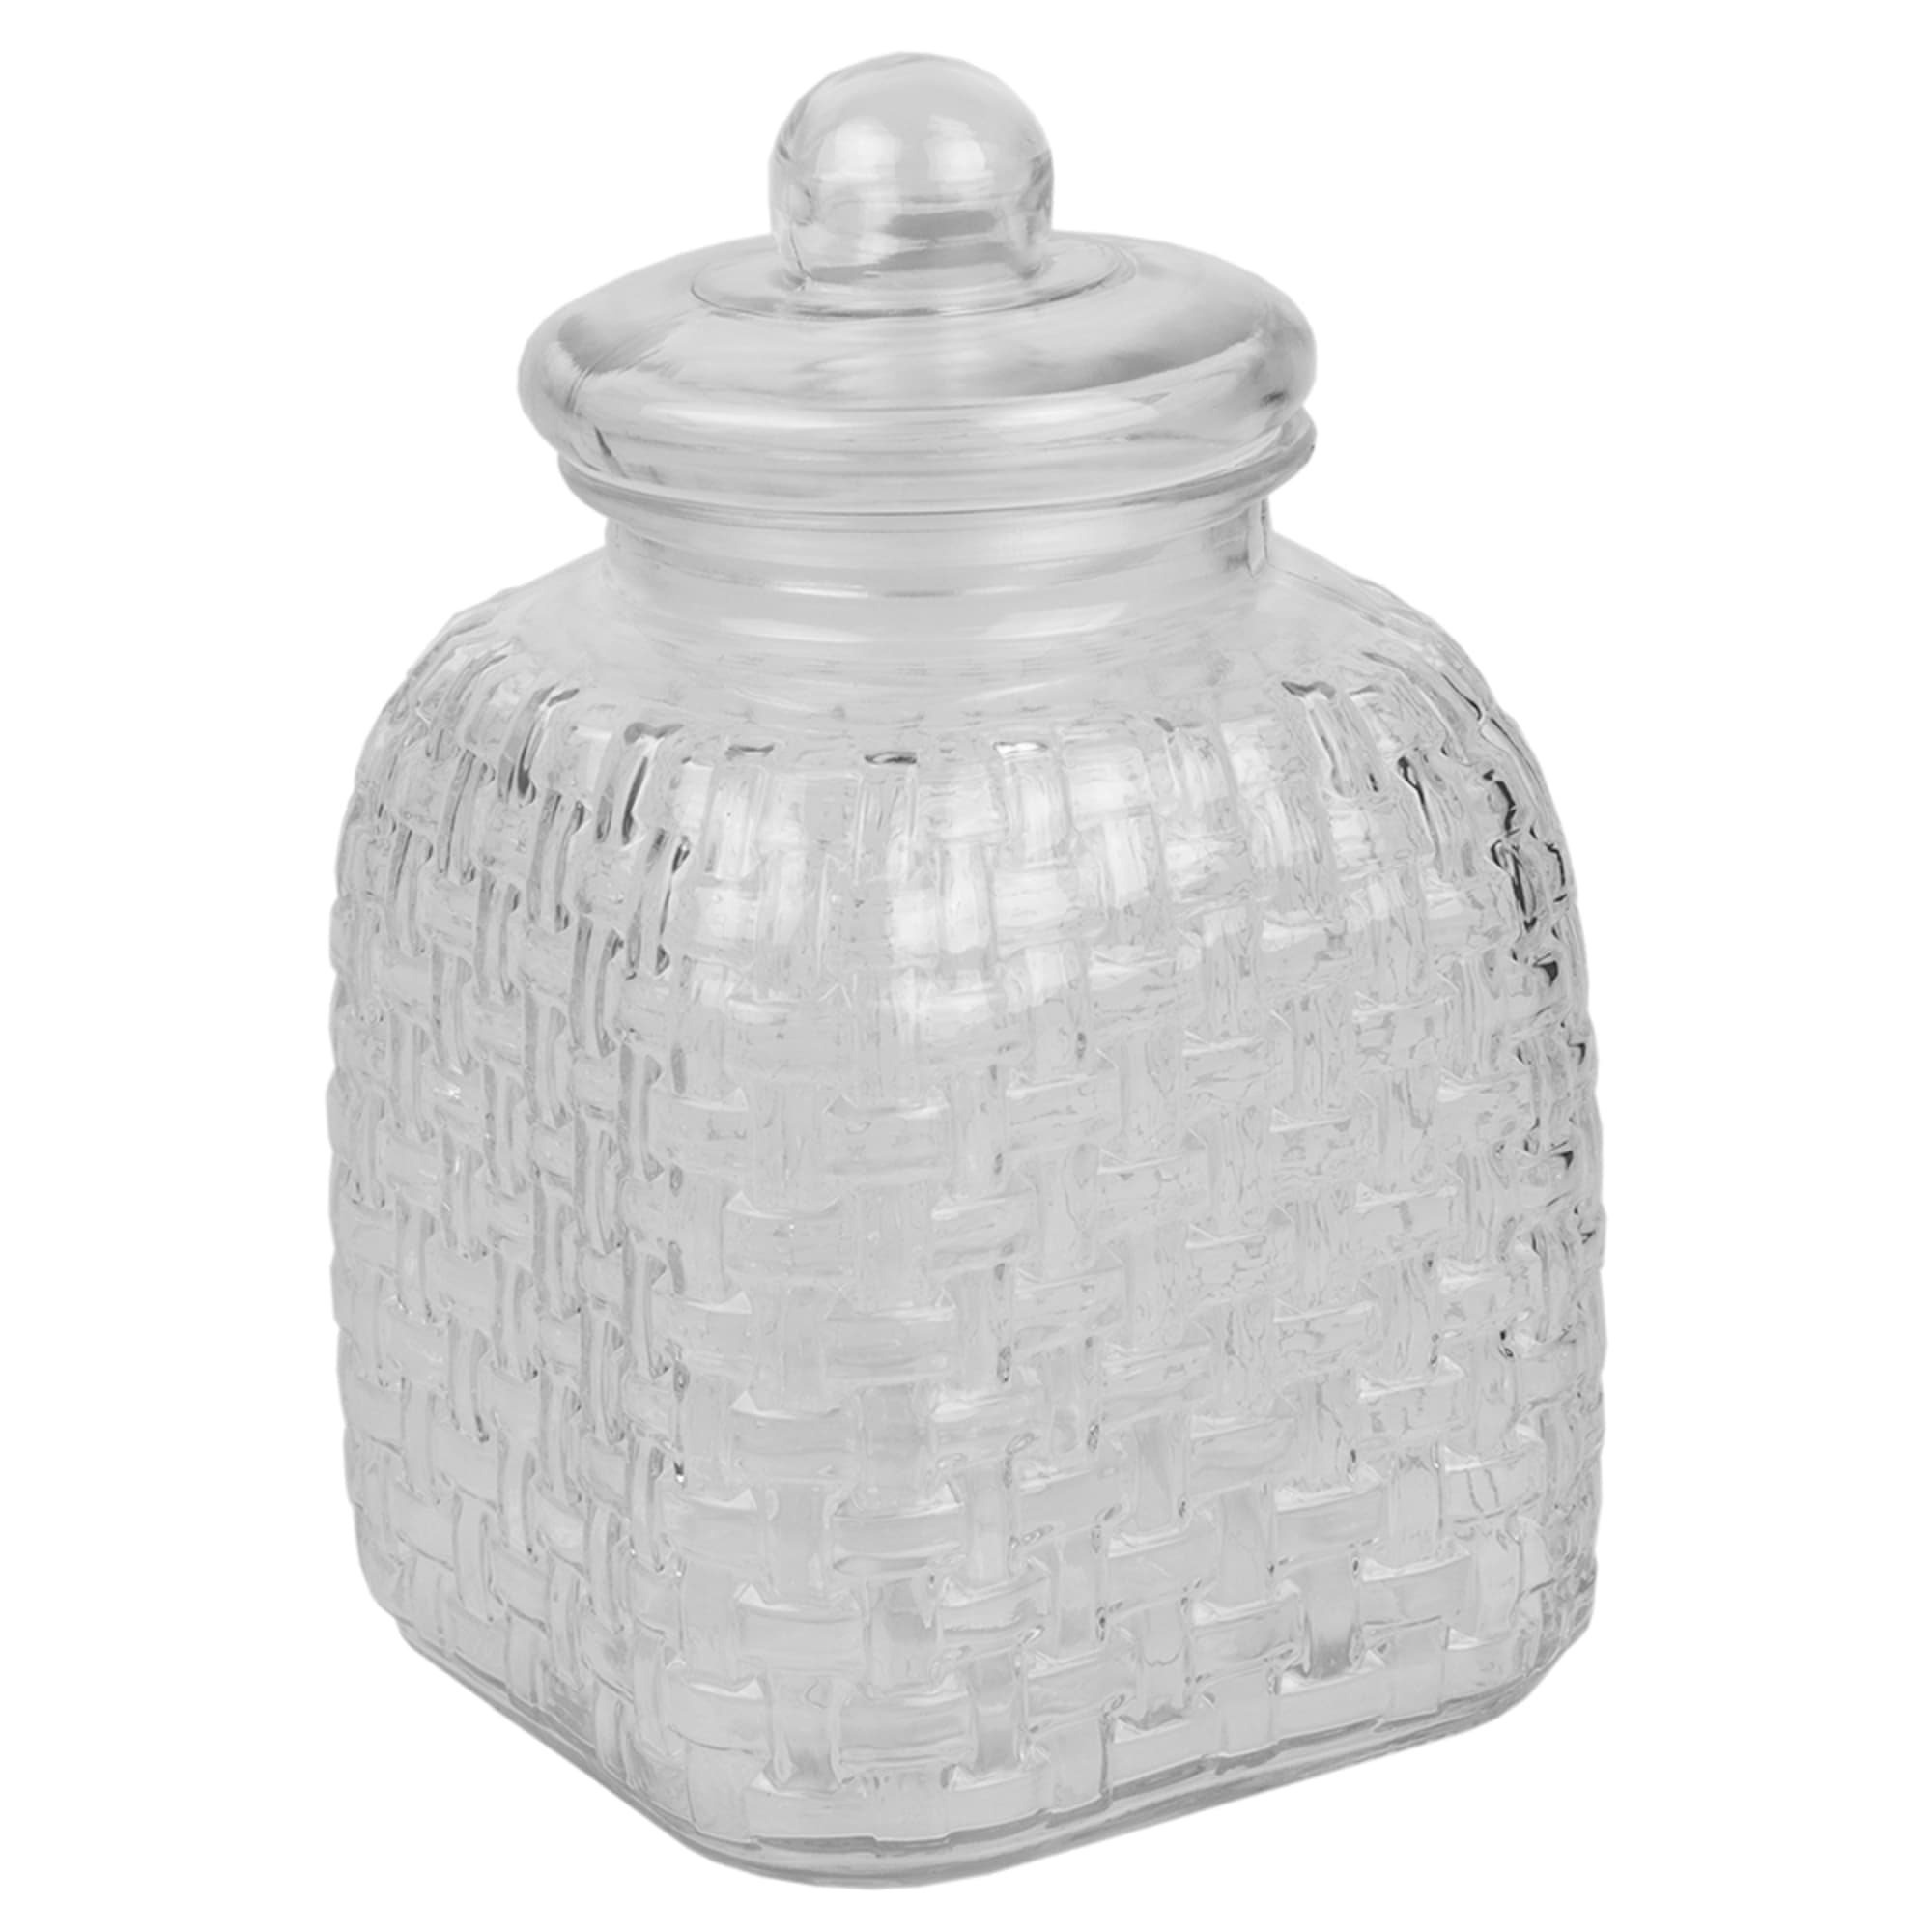 Home Basics Panama Collection 118 oz. Medium Glass Jar $5 EACH, CASE PACK OF 6